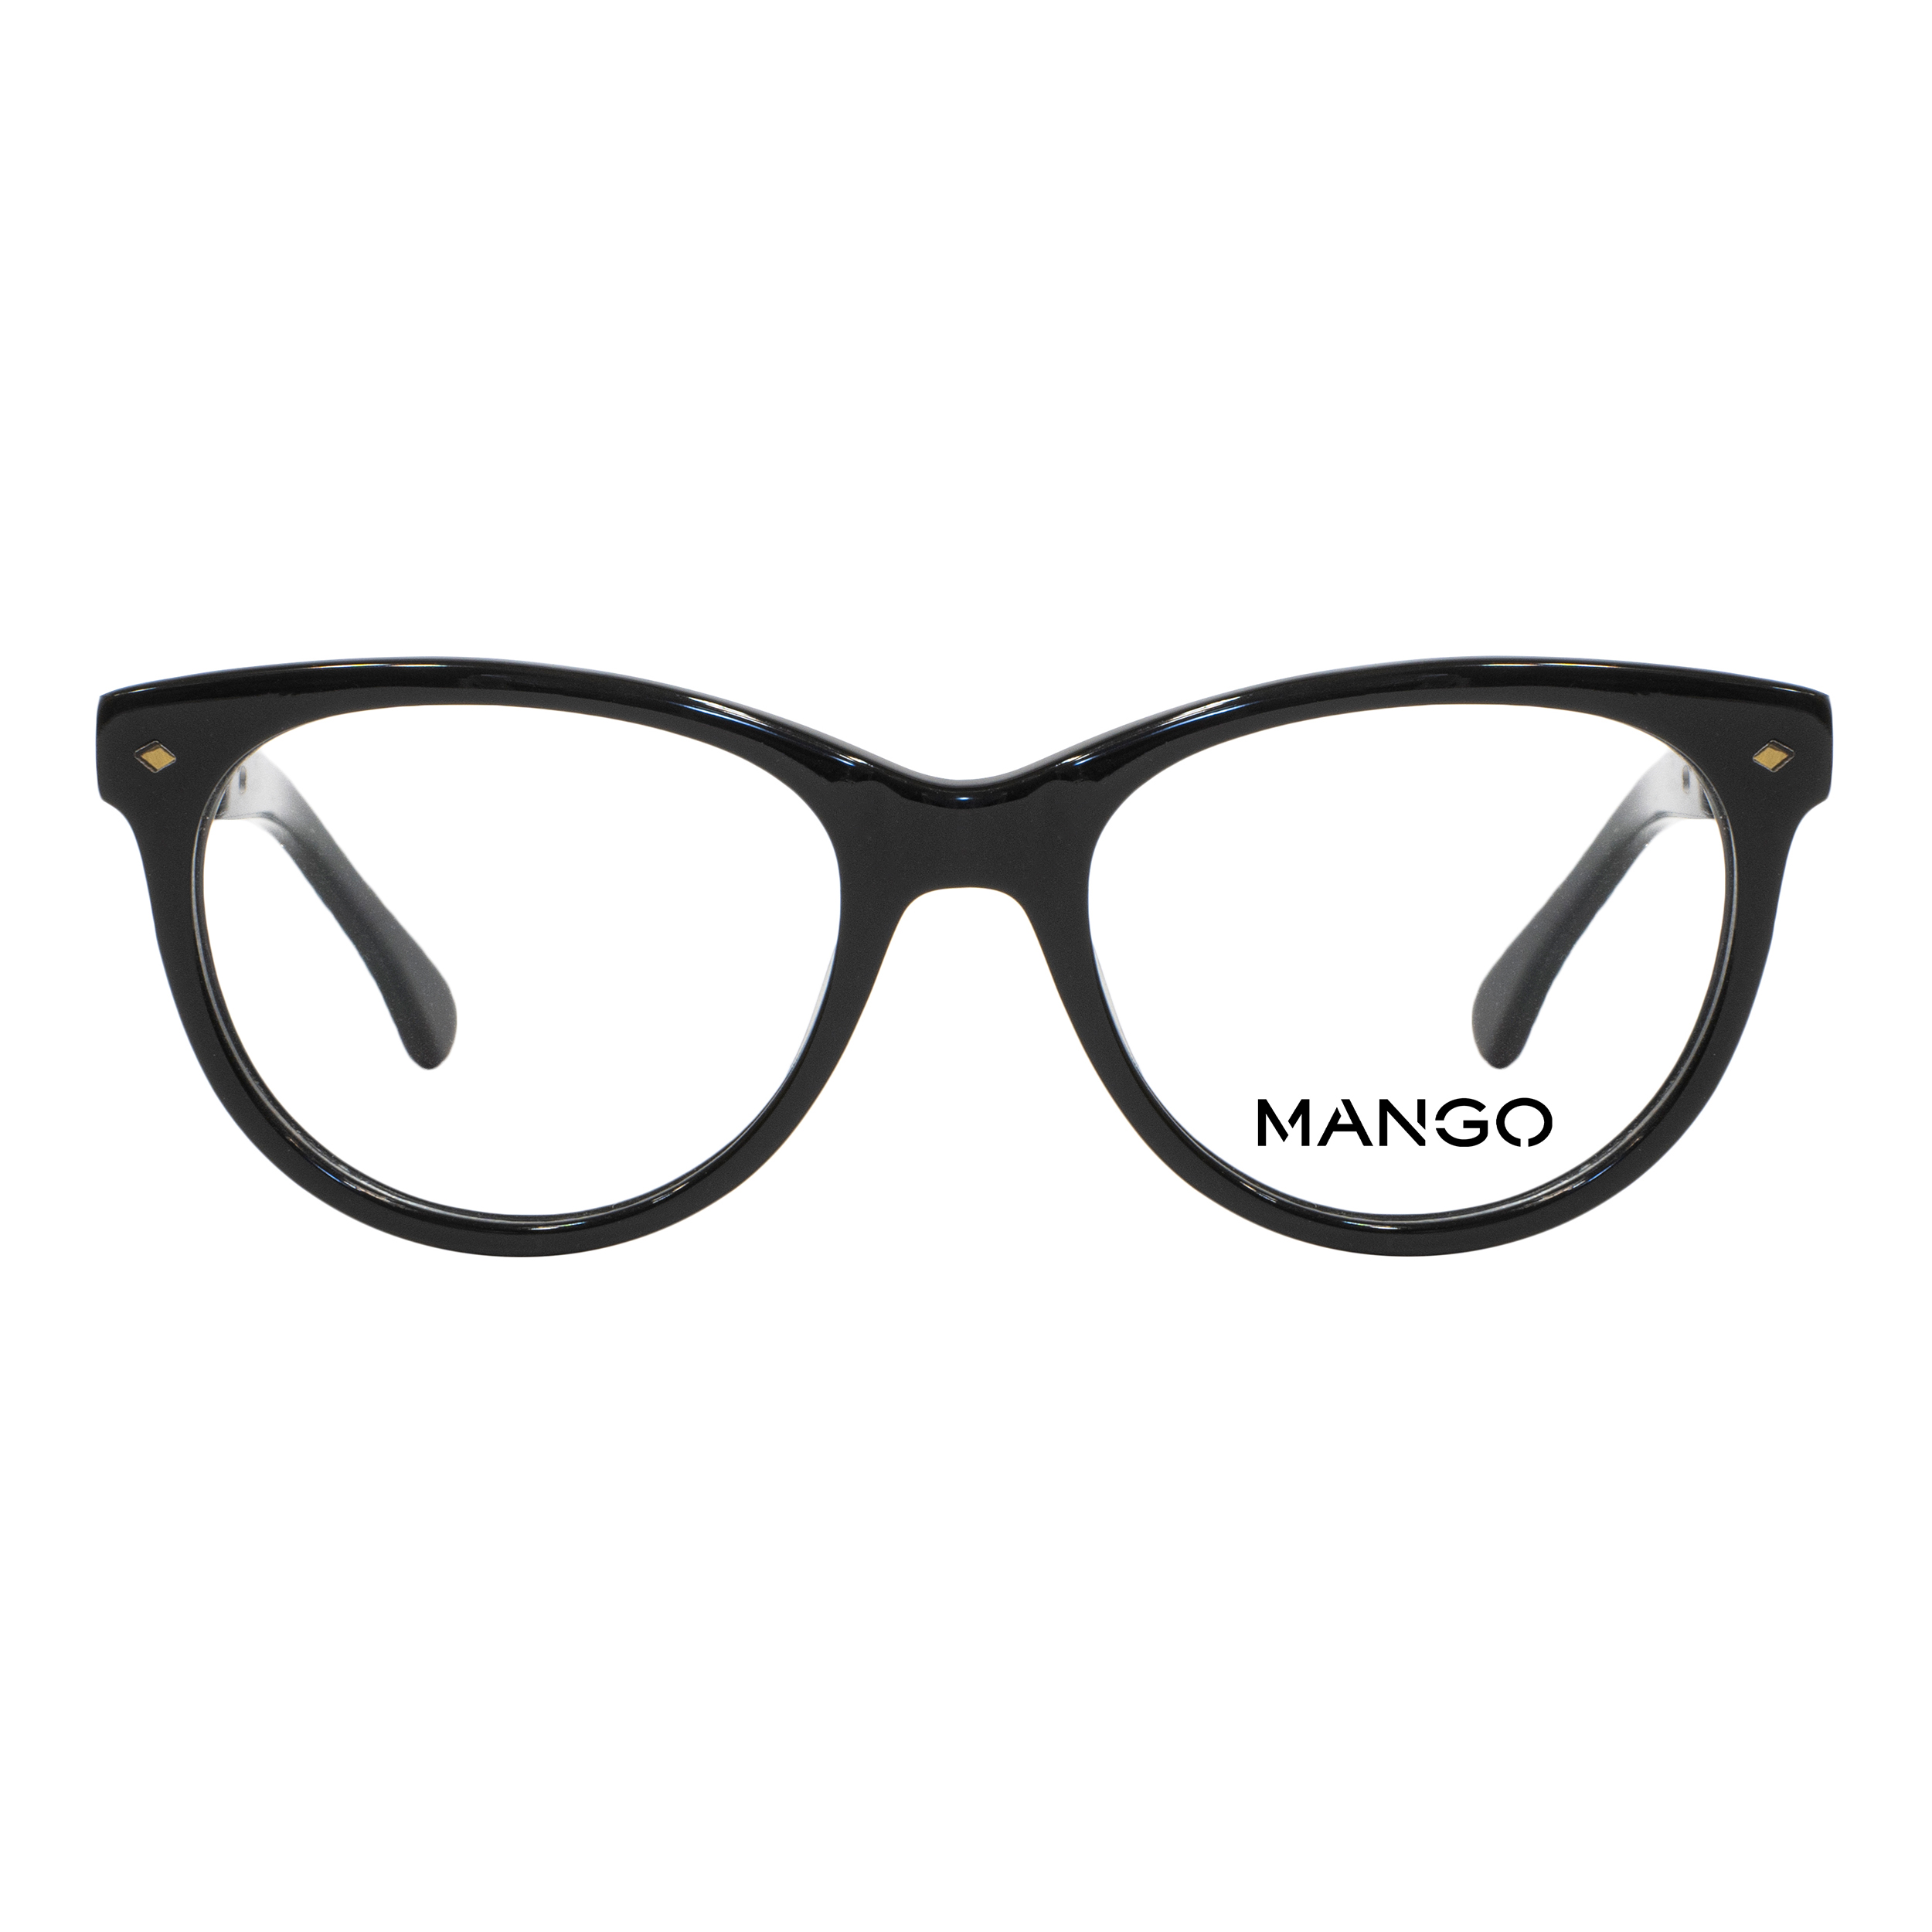 فریم عینک طبی مانگو مدل MNG32510